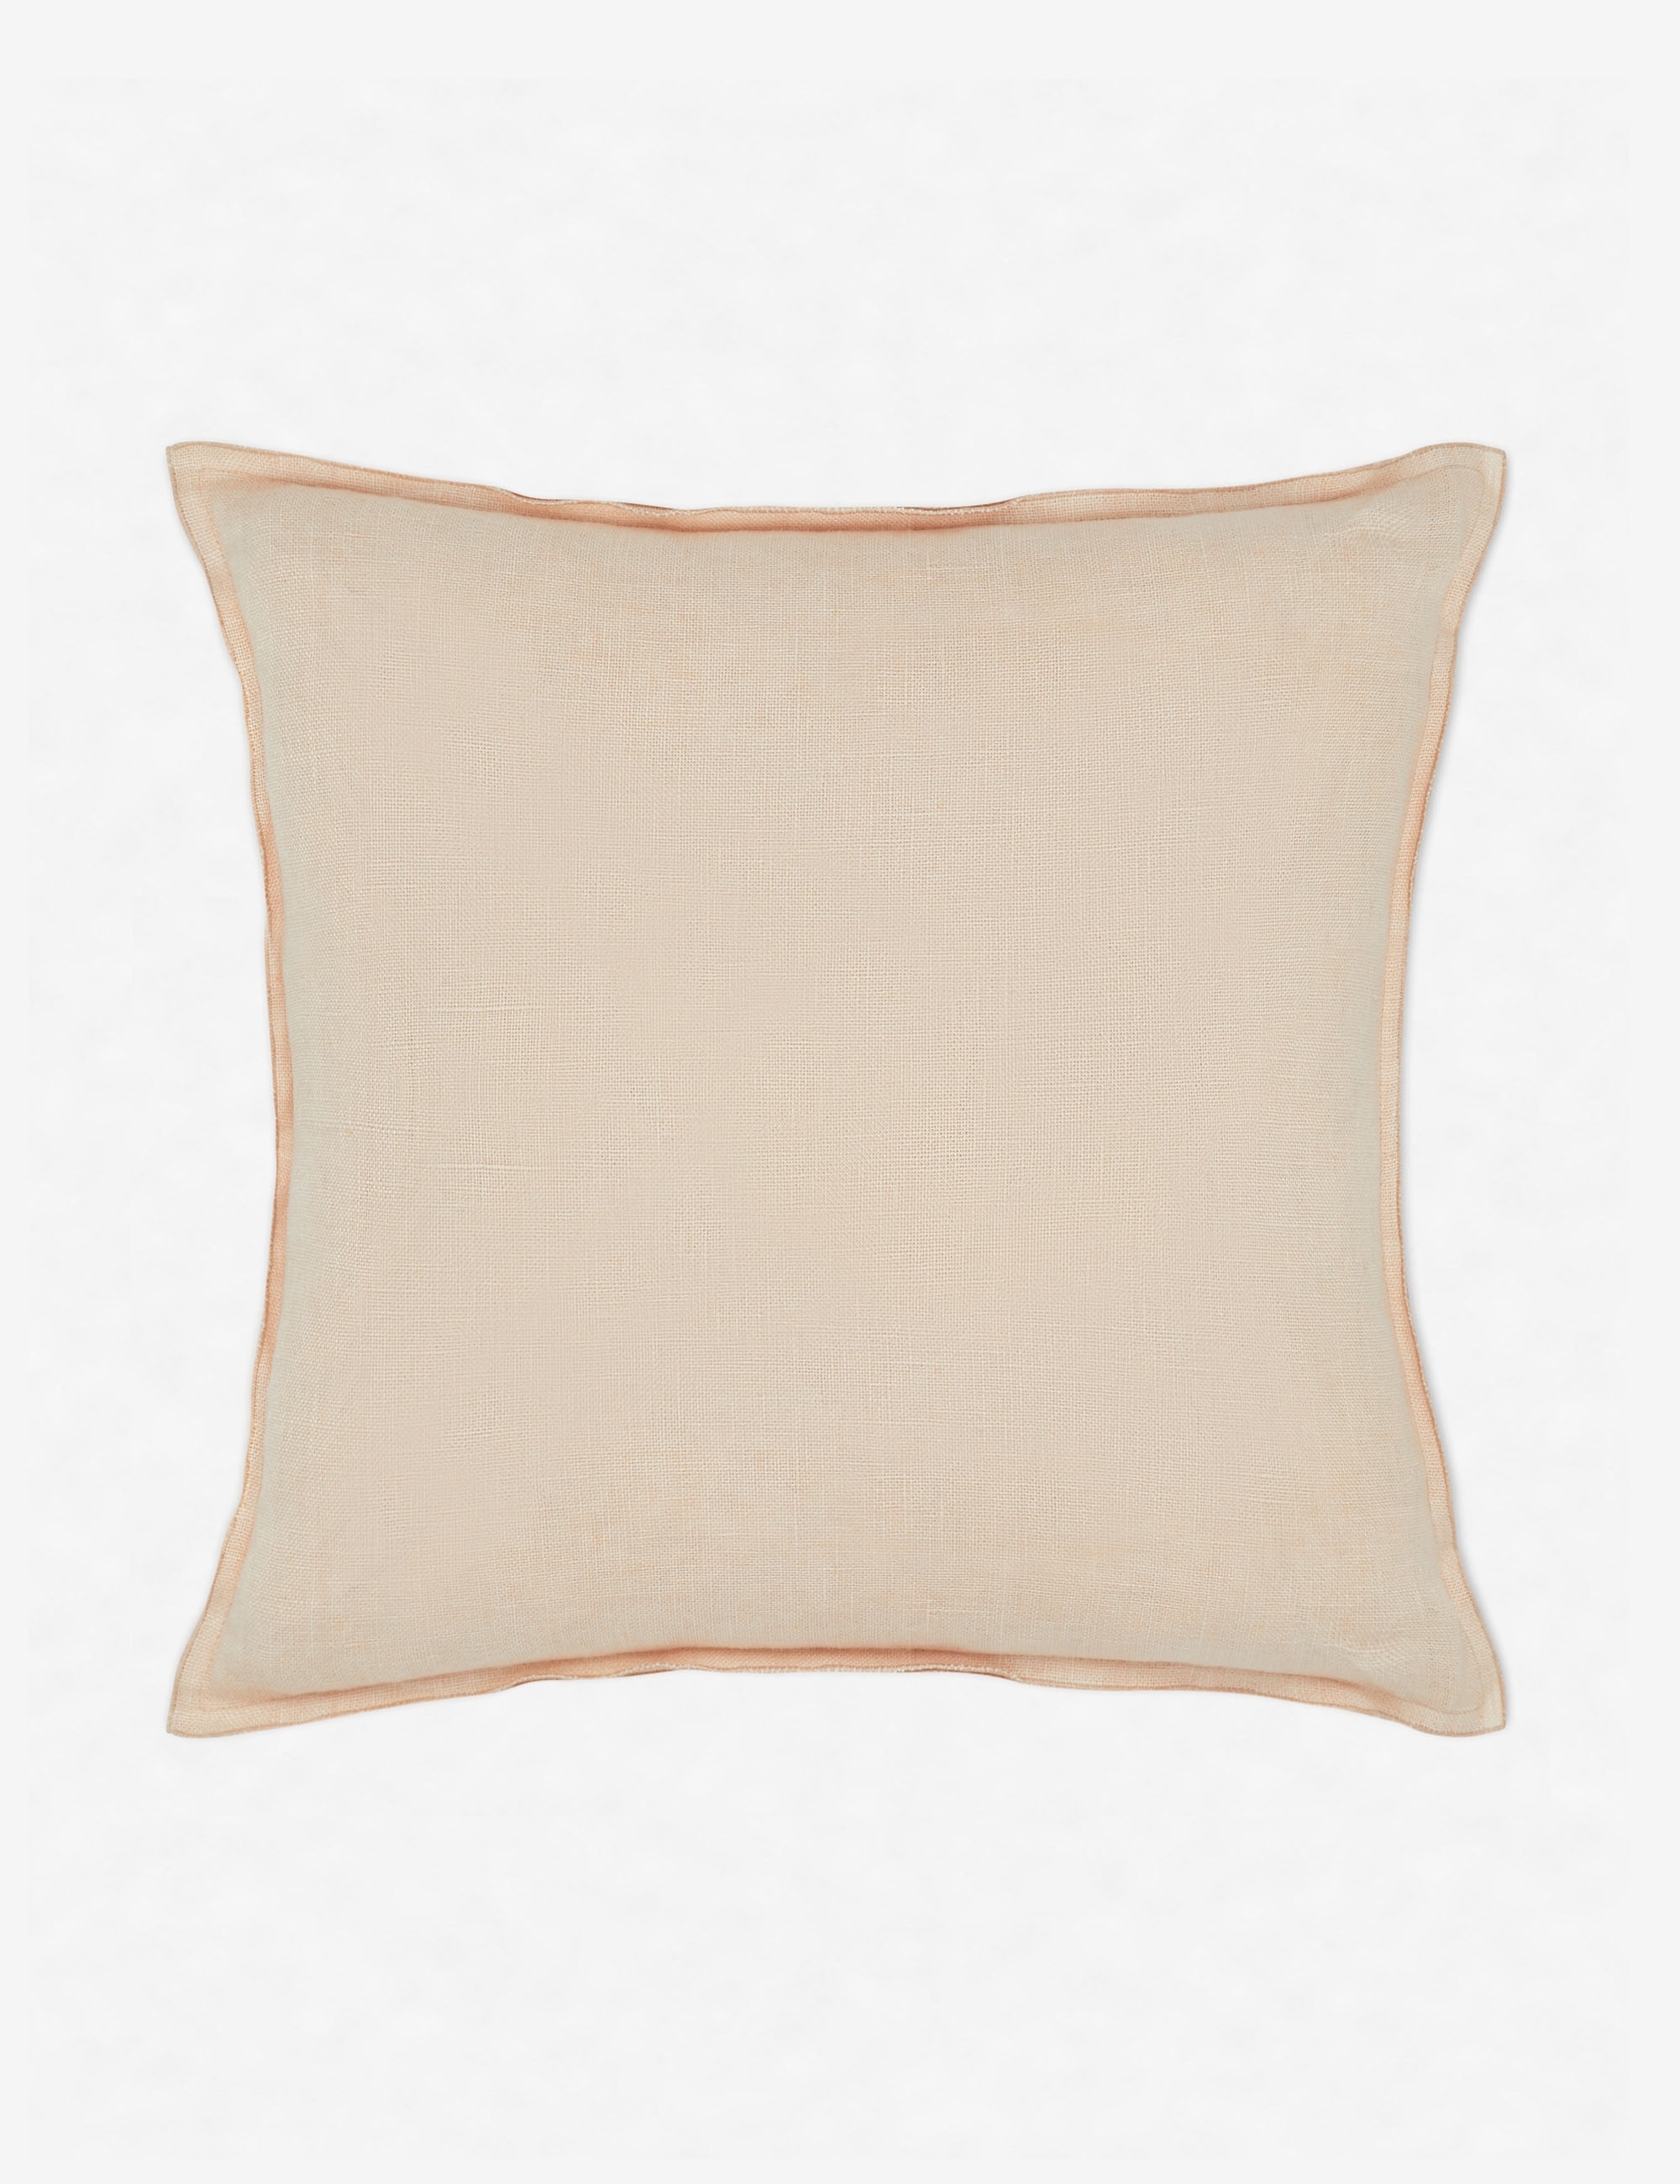 Arlo Linen Pillow, Blush - Image 2